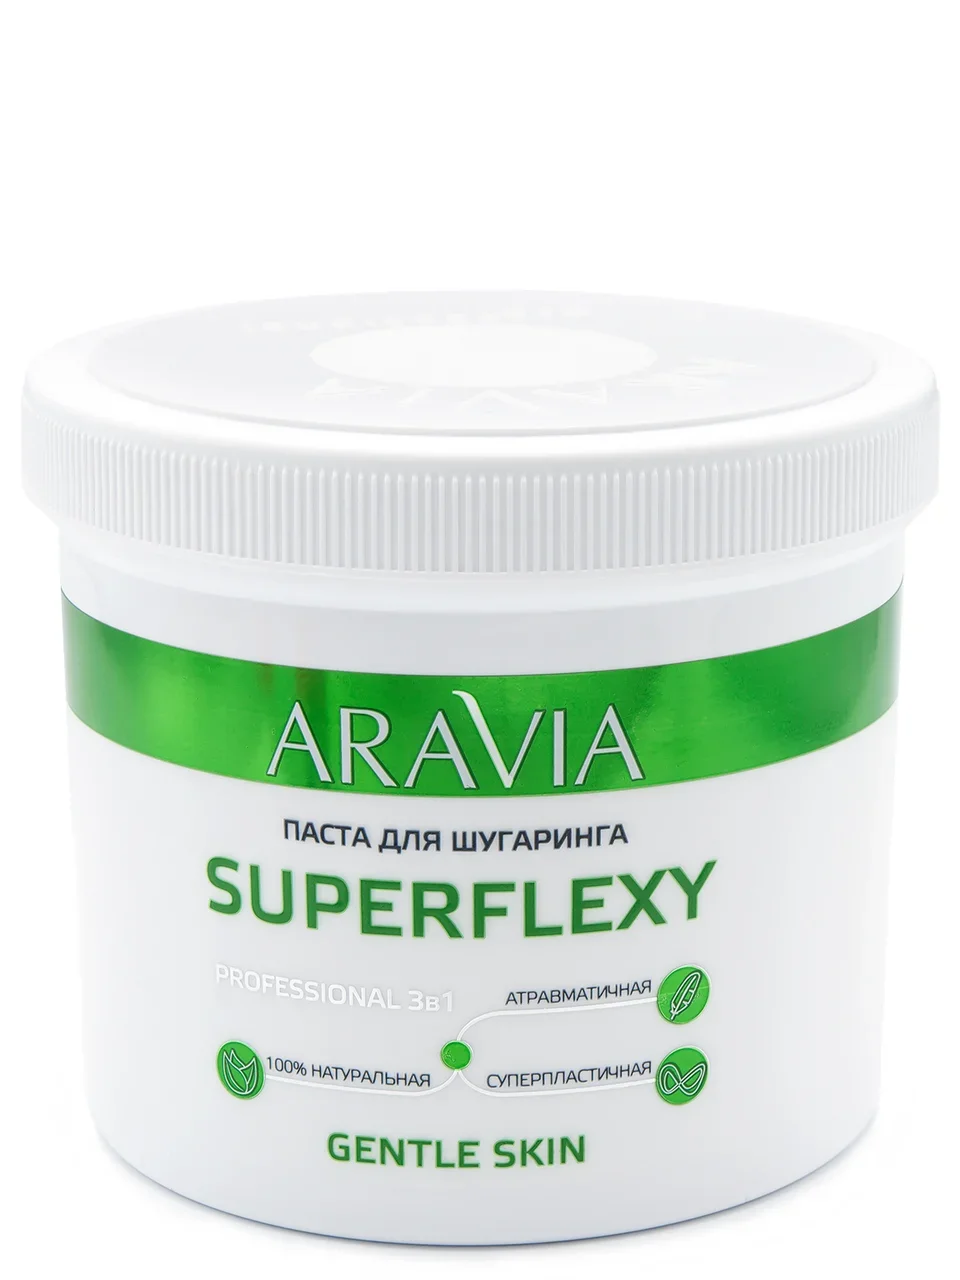 Паста для шугаринга Aravia Professional Superflexy Gentle Skin 750 г сахарная паста для шугаринга мягкой консистенции натуральная в картридже